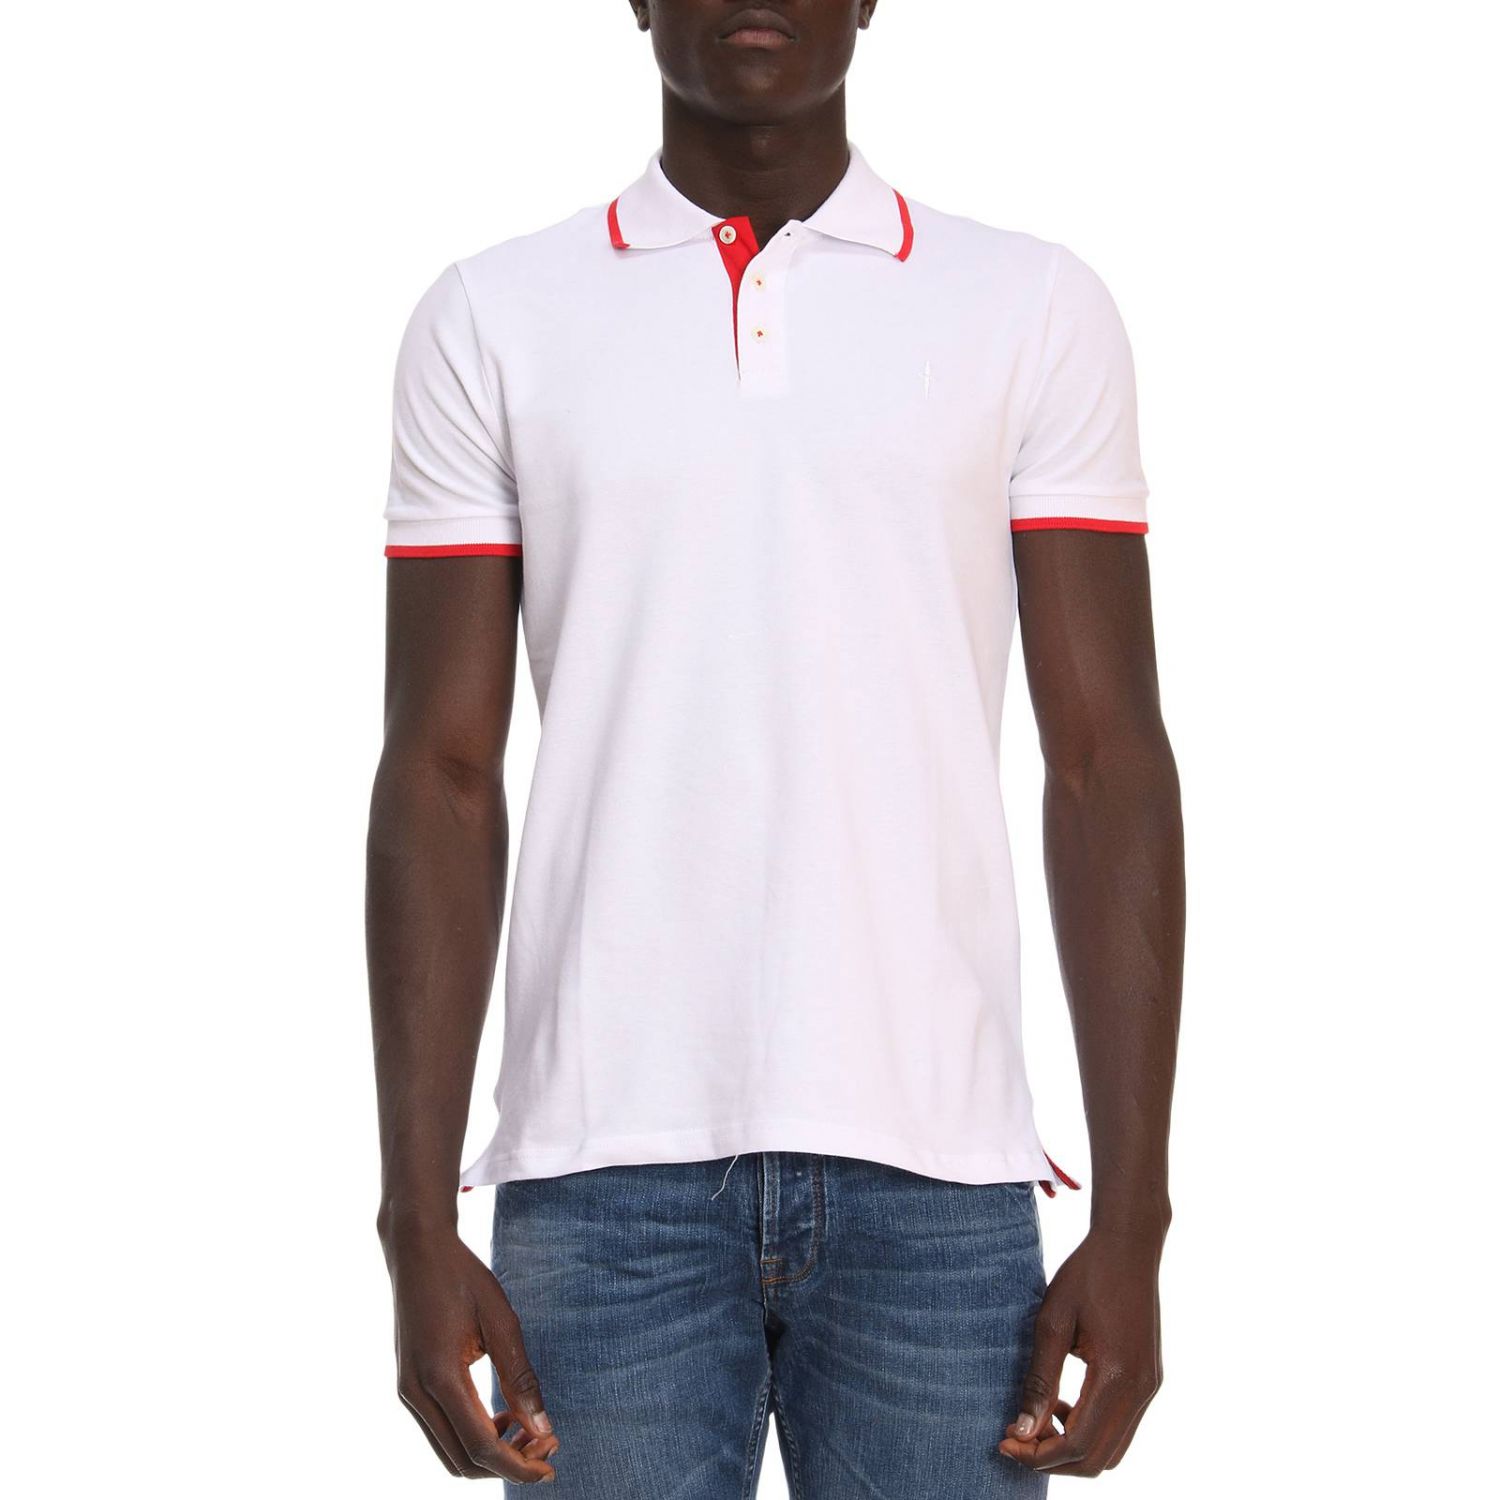 Paciotti 4Us Outlet: T-shirt men - White | T-Shirt Paciotti 4Us 1219 ...